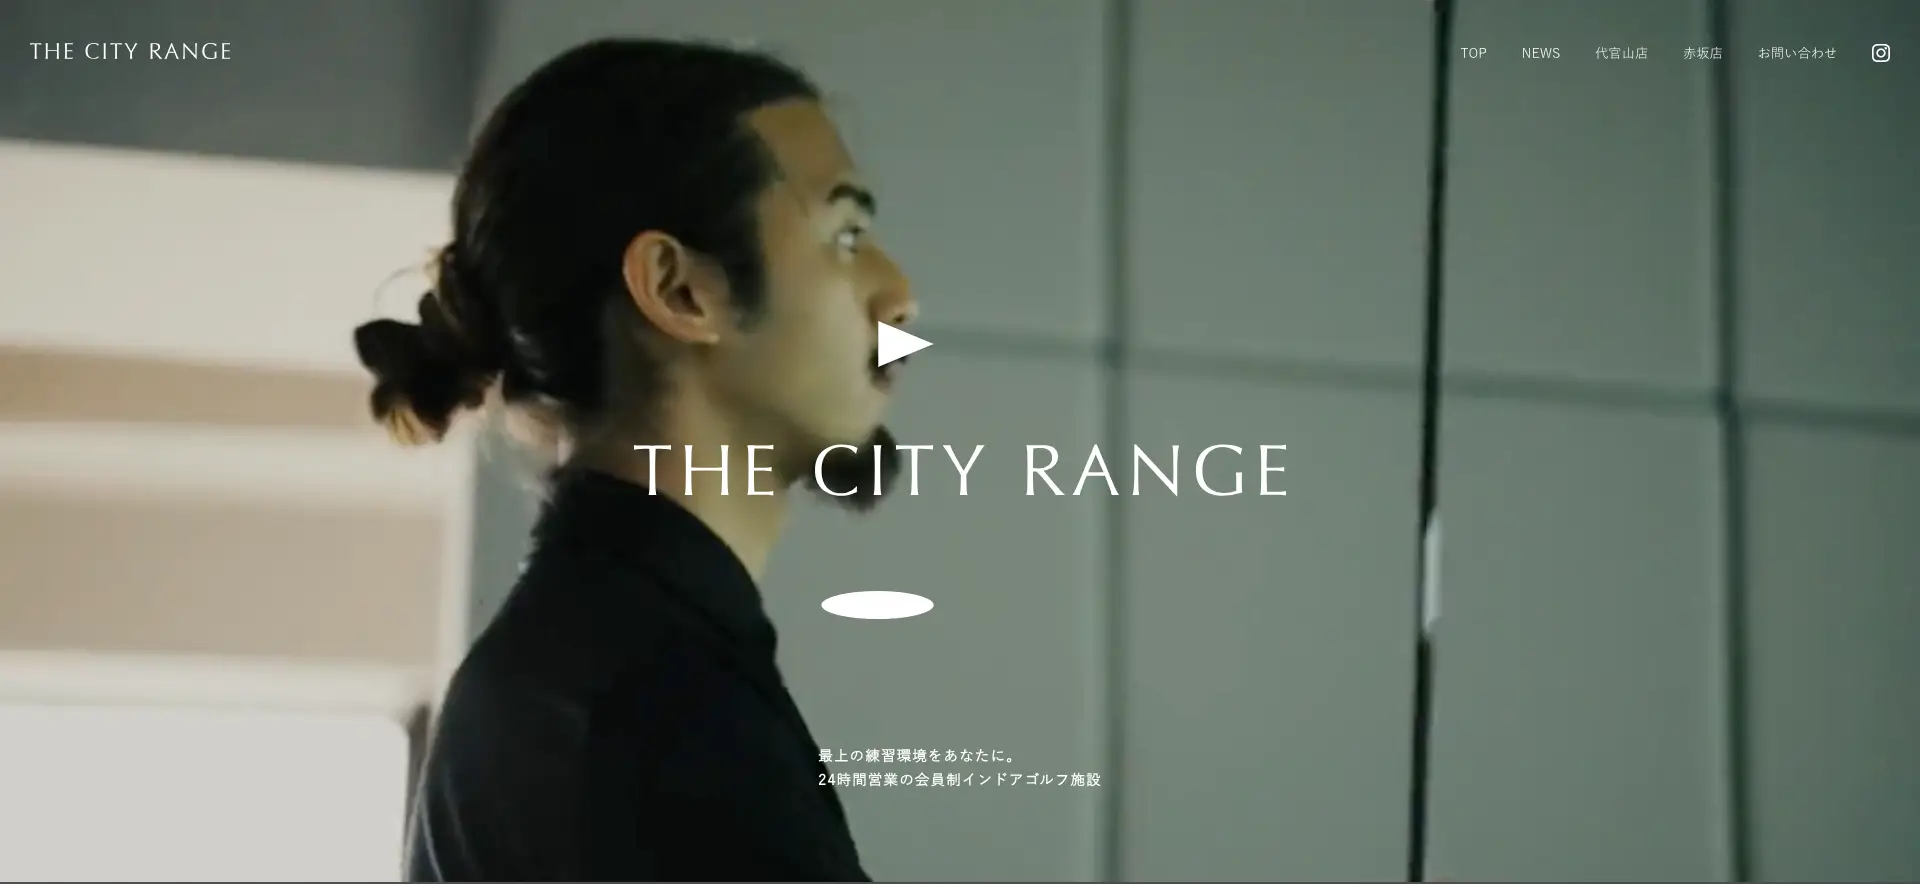 THE CITY RANGE 赤坂